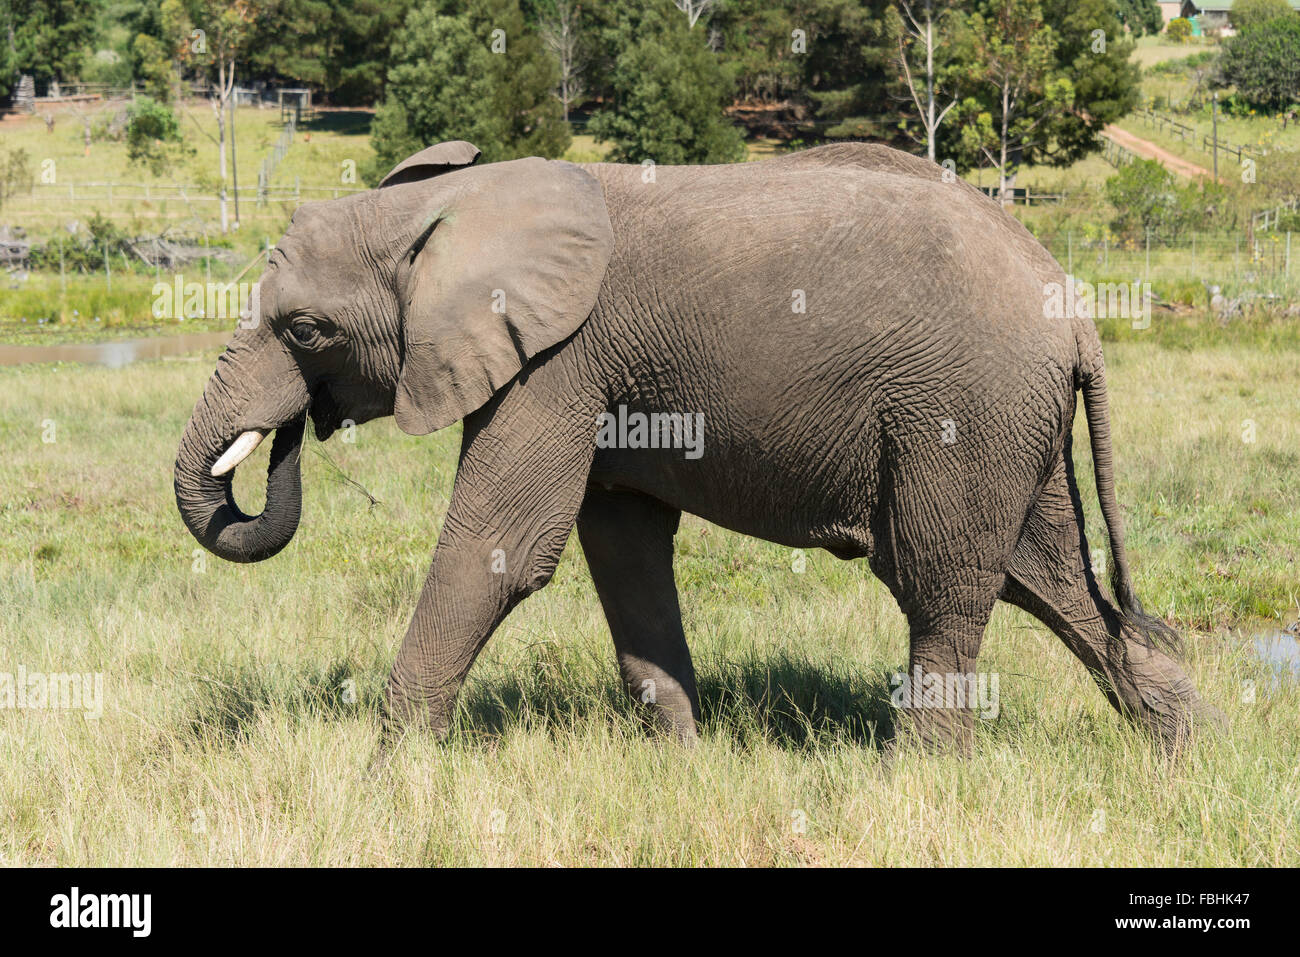 Male elephant at Knysna Elephant Park, Plettenberg Bay, Knysna, Knysna Municipality, Western Cape Province, Republic of South Af Stock Photo